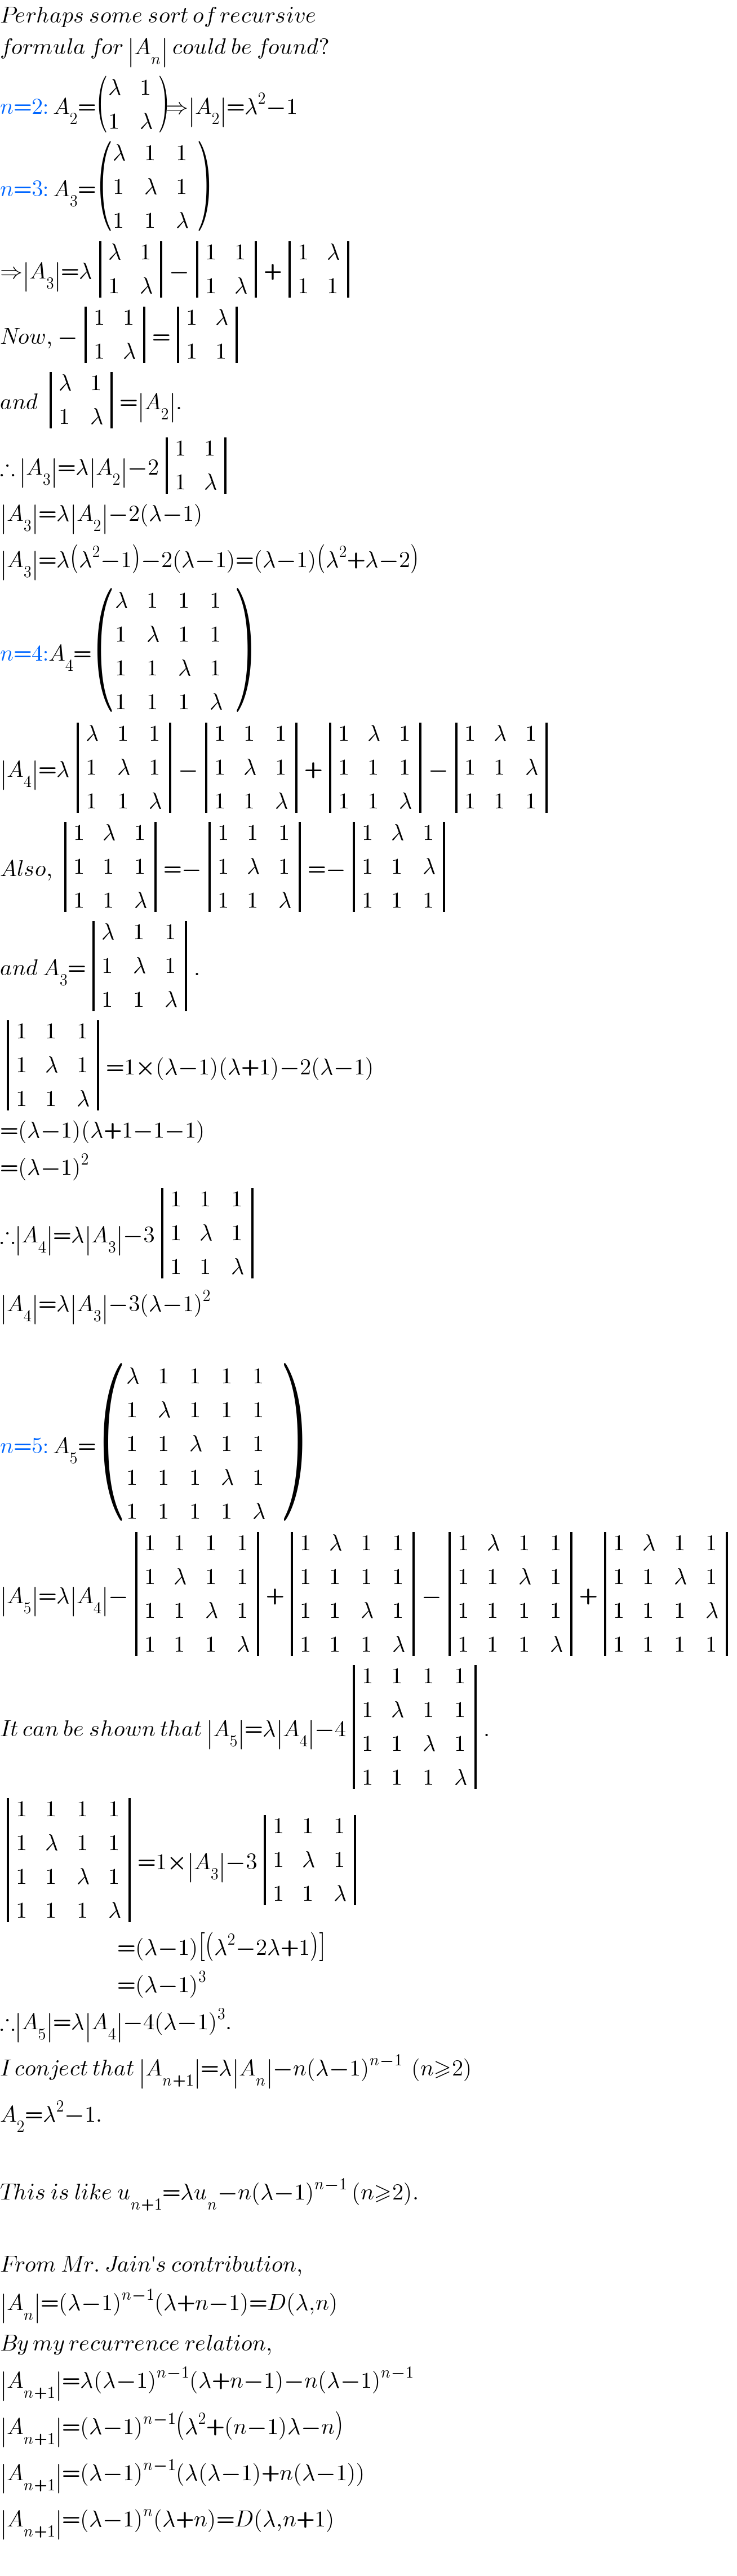 Perhaps some sort of recursive   formula for ∣A_n ∣ could be found?   n=2: A_2 = ((λ,1),(1,λ) )⇒∣A_2 ∣=λ^2 −1  n=3: A_3 = ((λ,1,1),(1,λ,1),(1,1,λ) )  ⇒∣A_3 ∣=λ determinant ((λ,1),(1,λ))− determinant ((1,1),(1,λ))+ determinant ((1,λ),(1,1))  Now, − determinant ((1,1),(1,λ))= determinant ((1,λ),(1,1))  and  determinant ((λ,1),(1,λ))=∣A_2 ∣.  ∴ ∣A_3 ∣=λ∣A_2 ∣−2 determinant ((1,1),(1,λ))  ∣A_3 ∣=λ∣A_2 ∣−2(λ−1)  ∣A_3 ∣=λ(λ^2 −1)−2(λ−1)=(λ−1)(λ^2 +λ−2)  n=4:A_4 = ((λ,1,1,1),(1,λ,1,1),(1,1,λ,1),(1,1,1,λ) )  ∣A_4 ∣=λ determinant ((λ,1,1),(1,λ,1),(1,1,λ))− determinant ((1,1,1),(1,λ,1),(1,1,λ))+ determinant ((1,λ,1),(1,1,1),(1,1,λ))− determinant ((1,λ,1),(1,1,λ),(1,1,1))  Also,  determinant ((1,λ,1),(1,1,1),(1,1,λ))=− determinant ((1,1,1),(1,λ,1),(1,1,λ))=− determinant ((1,λ,1),(1,1,λ),(1,1,1))  and A_3 = determinant ((λ,1,1),(1,λ,1),(1,1,λ)).   determinant ((1,1,1),(1,λ,1),(1,1,λ))=1×(λ−1)(λ+1)−2(λ−1)  =(λ−1)(λ+1−1−1)  =(λ−1)^2   ∴∣A_4 ∣=λ∣A_3 ∣−3 determinant ((1,1,1),(1,λ,1),(1,1,λ))  ∣A_4 ∣=λ∣A_3 ∣−3(λ−1)^2     n=5: A_5 = ((λ,1,1,1,1),(1,λ,1,1,1),(1,1,λ,1,1),(1,1,1,λ,1),(1,1,1,1,λ) )  ∣A_5 ∣=λ∣A_4 ∣− determinant ((1,1,1,1),(1,λ,1,1),(1,1,λ,1),(1,1,1,λ))+ determinant ((1,λ,1,1),(1,1,1,1),(1,1,λ,1),(1,1,1,λ))− determinant ((1,λ,1,1),(1,1,λ,1),(1,1,1,1),(1,1,1,λ))+ determinant ((1,λ,1,1),(1,1,λ,1),(1,1,1,λ),(1,1,1,1))  It can be shown that ∣A_5 ∣=λ∣A_4 ∣−4 determinant ((1,1,1,1),(1,λ,1,1),(1,1,λ,1),(1,1,1,λ)).   determinant ((1,1,1,1),(1,λ,1,1),(1,1,λ,1),(1,1,1,λ))=1×∣A_3 ∣−3 determinant ((1,1,1),(1,λ,1),(1,1,λ))                            =(λ−1)[(λ^2 −2λ+1)]                            =(λ−1)^3   ∴∣A_5 ∣=λ∣A_4 ∣−4(λ−1)^3 .  I conject that ∣A_(n+1) ∣=λ∣A_n ∣−n(λ−1)^(n−1)   (n≥2)  A_2 =λ^2 −1.     This is like u_(n+1) =λu_n −n(λ−1)^(n−1)  (n≥2).    From Mr. Jain′s contribution,  ∣A_n ∣=(λ−1)^(n−1) (λ+n−1)=D(λ,n)  By my recurrence relation,  ∣A_(n+1) ∣=λ(λ−1)^(n−1) (λ+n−1)−n(λ−1)^(n−1)   ∣A_(n+1) ∣=(λ−1)^(n−1) (λ^2 +(n−1)λ−n)  ∣A_(n+1) ∣=(λ−1)^(n−1) (λ(λ−1)+n(λ−1))  ∣A_(n+1) ∣=(λ−1)^n (λ+n)=D(λ,n+1)    